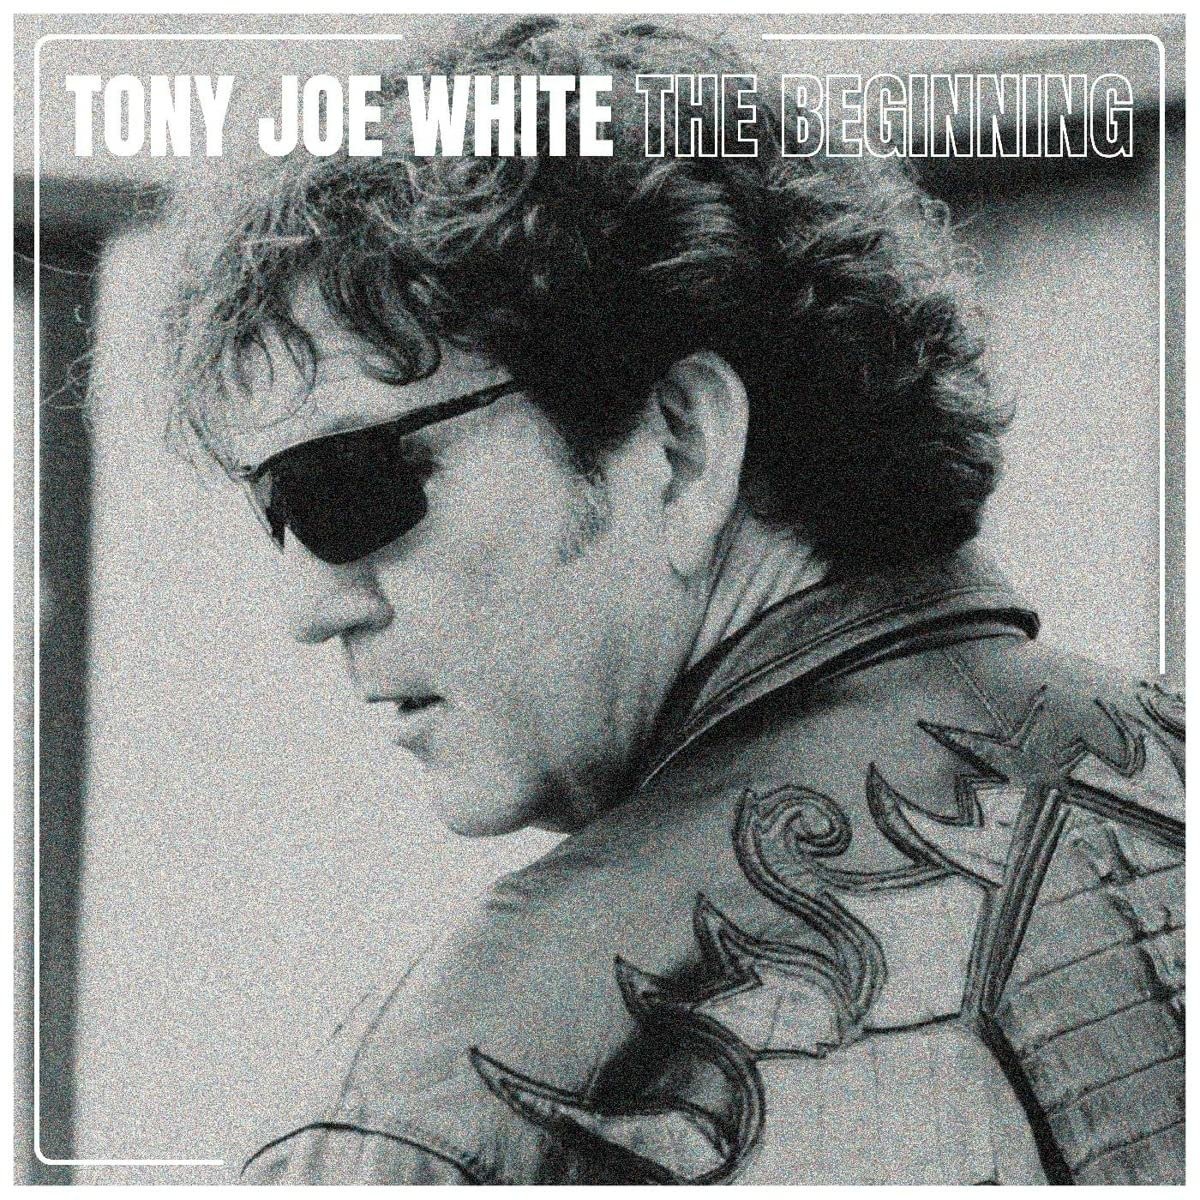 WHITE, TONY JOE - BEGINNING, Vinyl